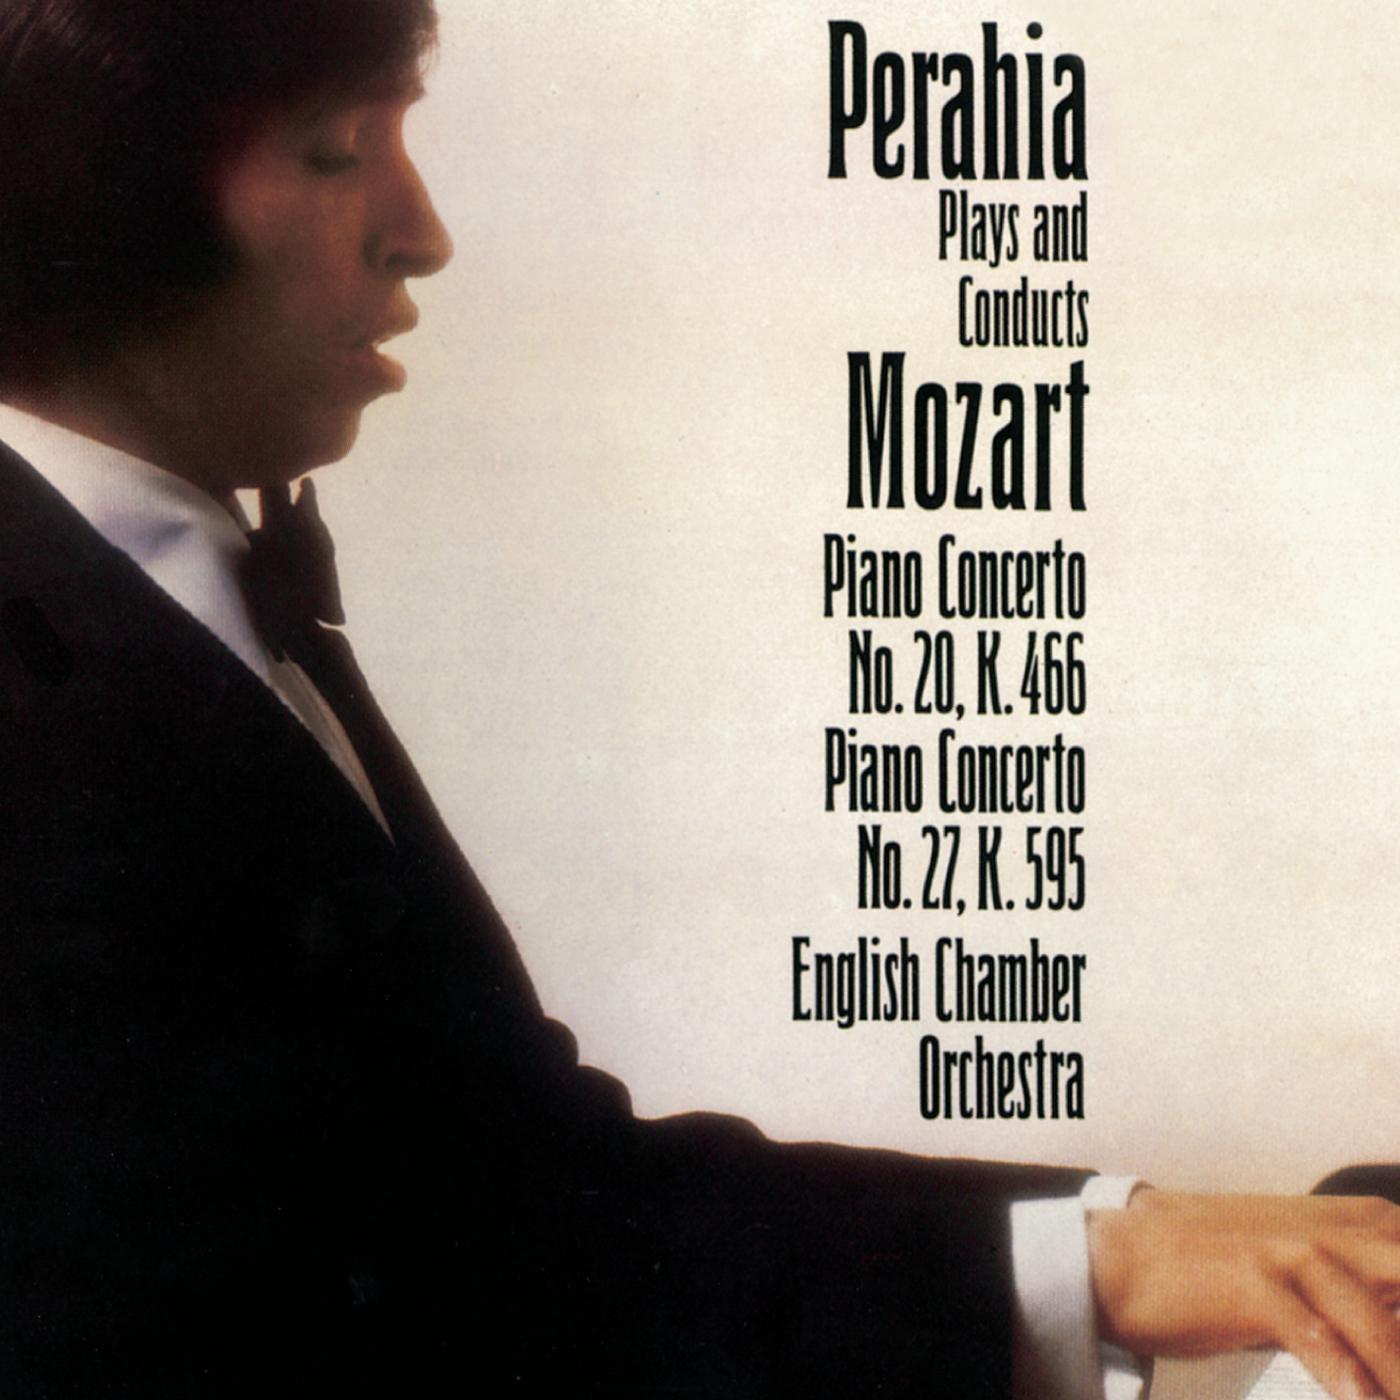 Perahia Plays & Conducts Mozart